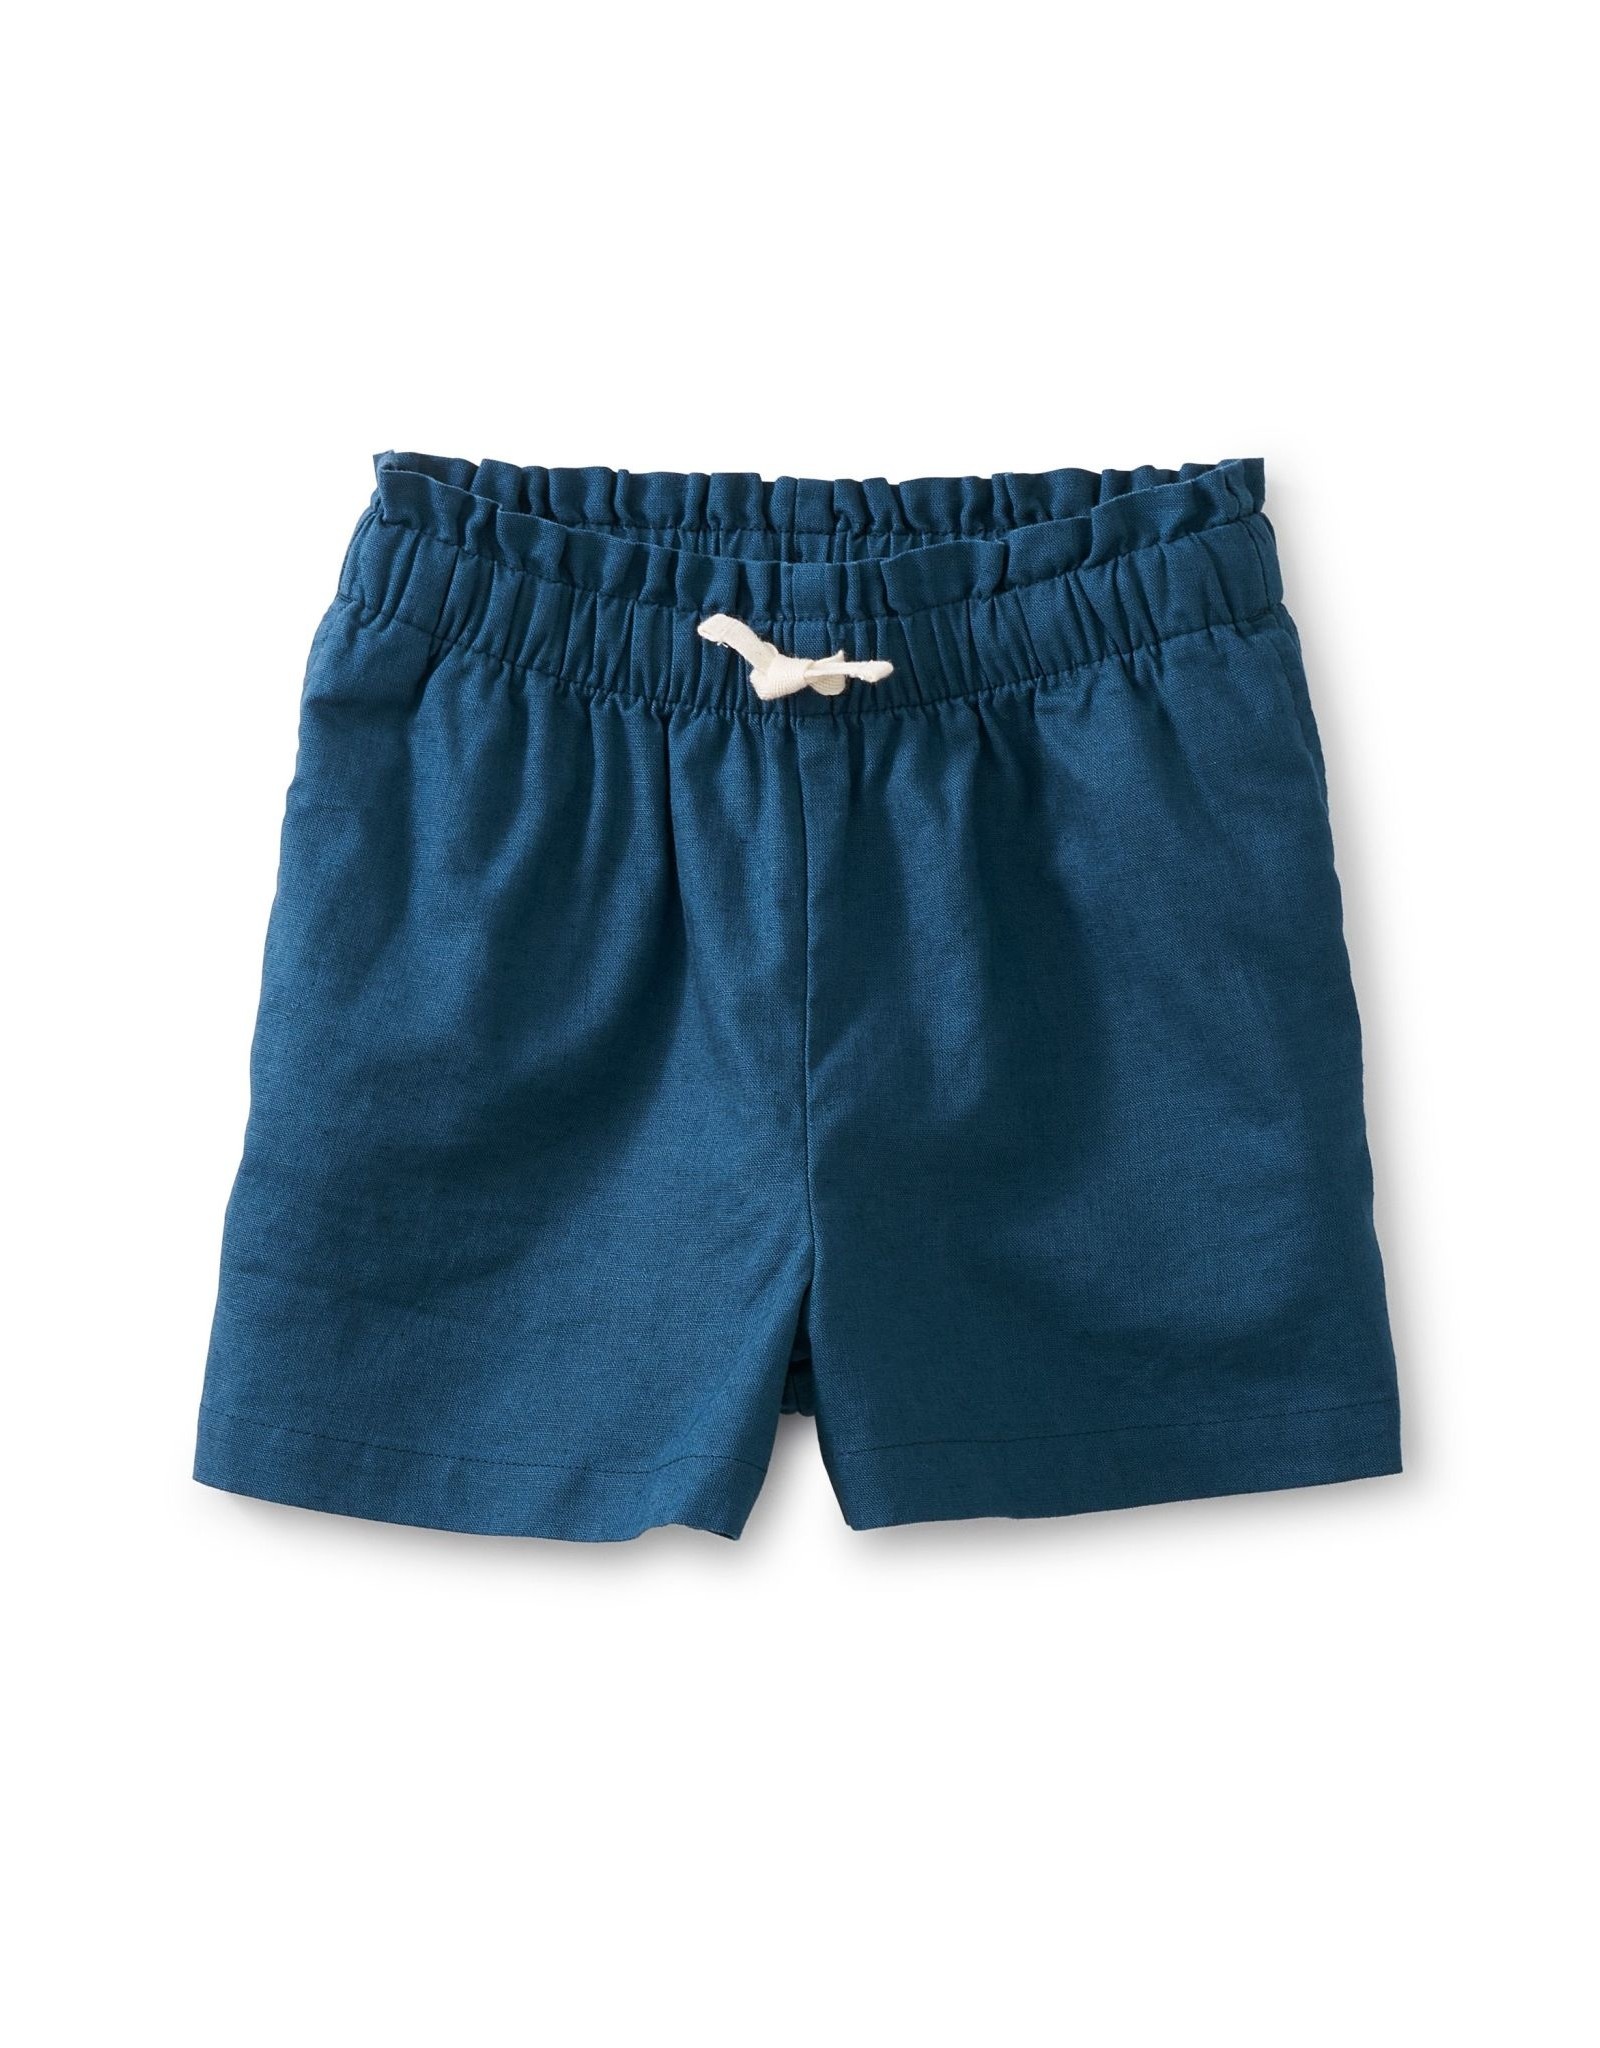 Tea Collection Skipper Shorts - Bedford Blue